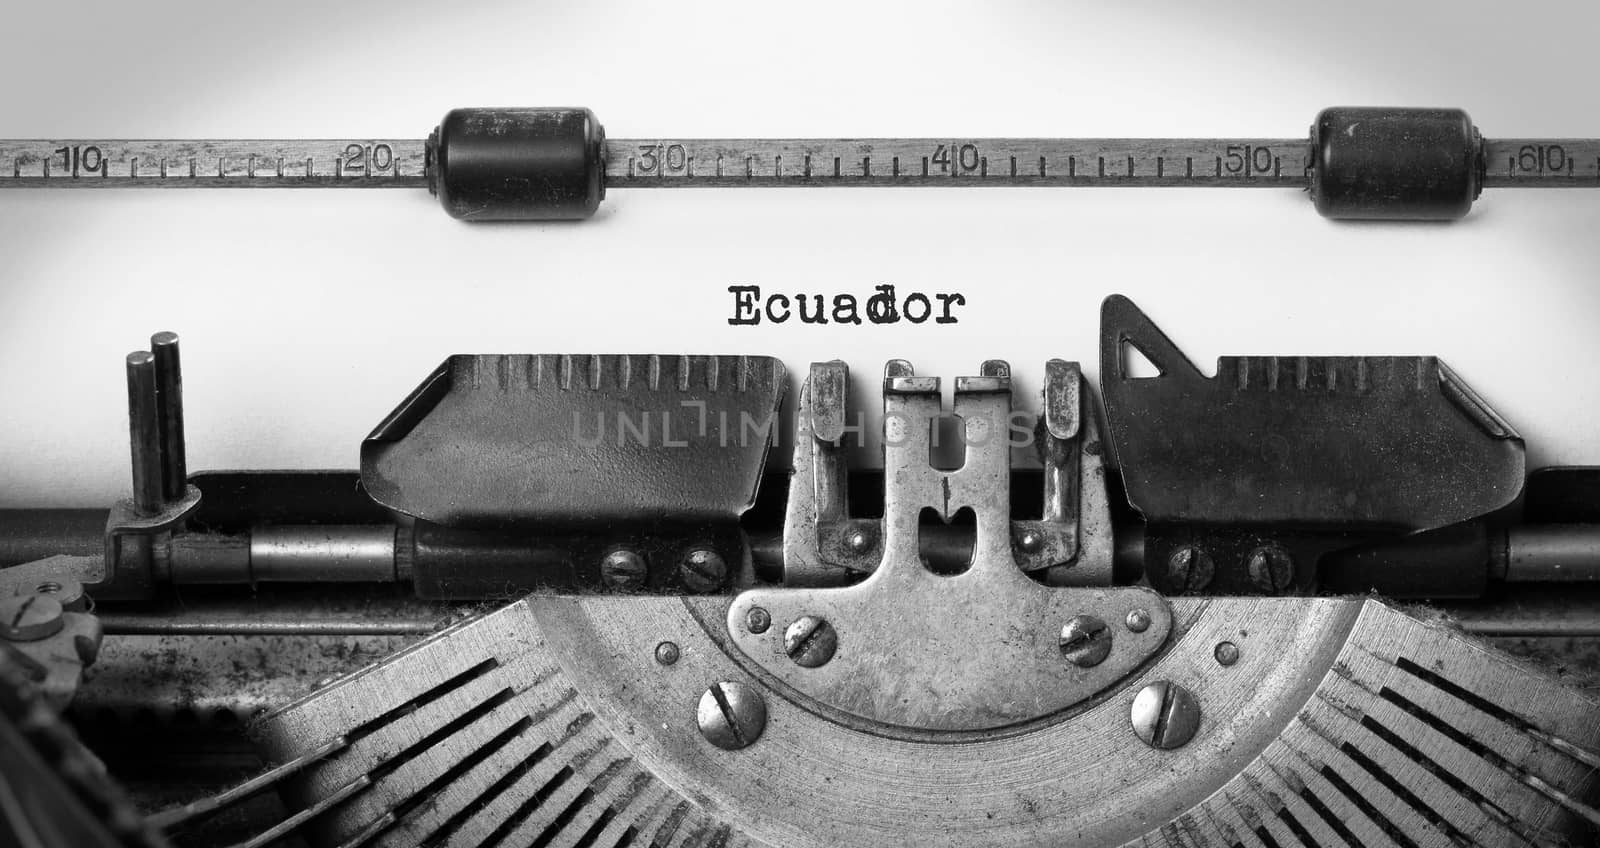 Old typewriter - Ecuador by michaklootwijk